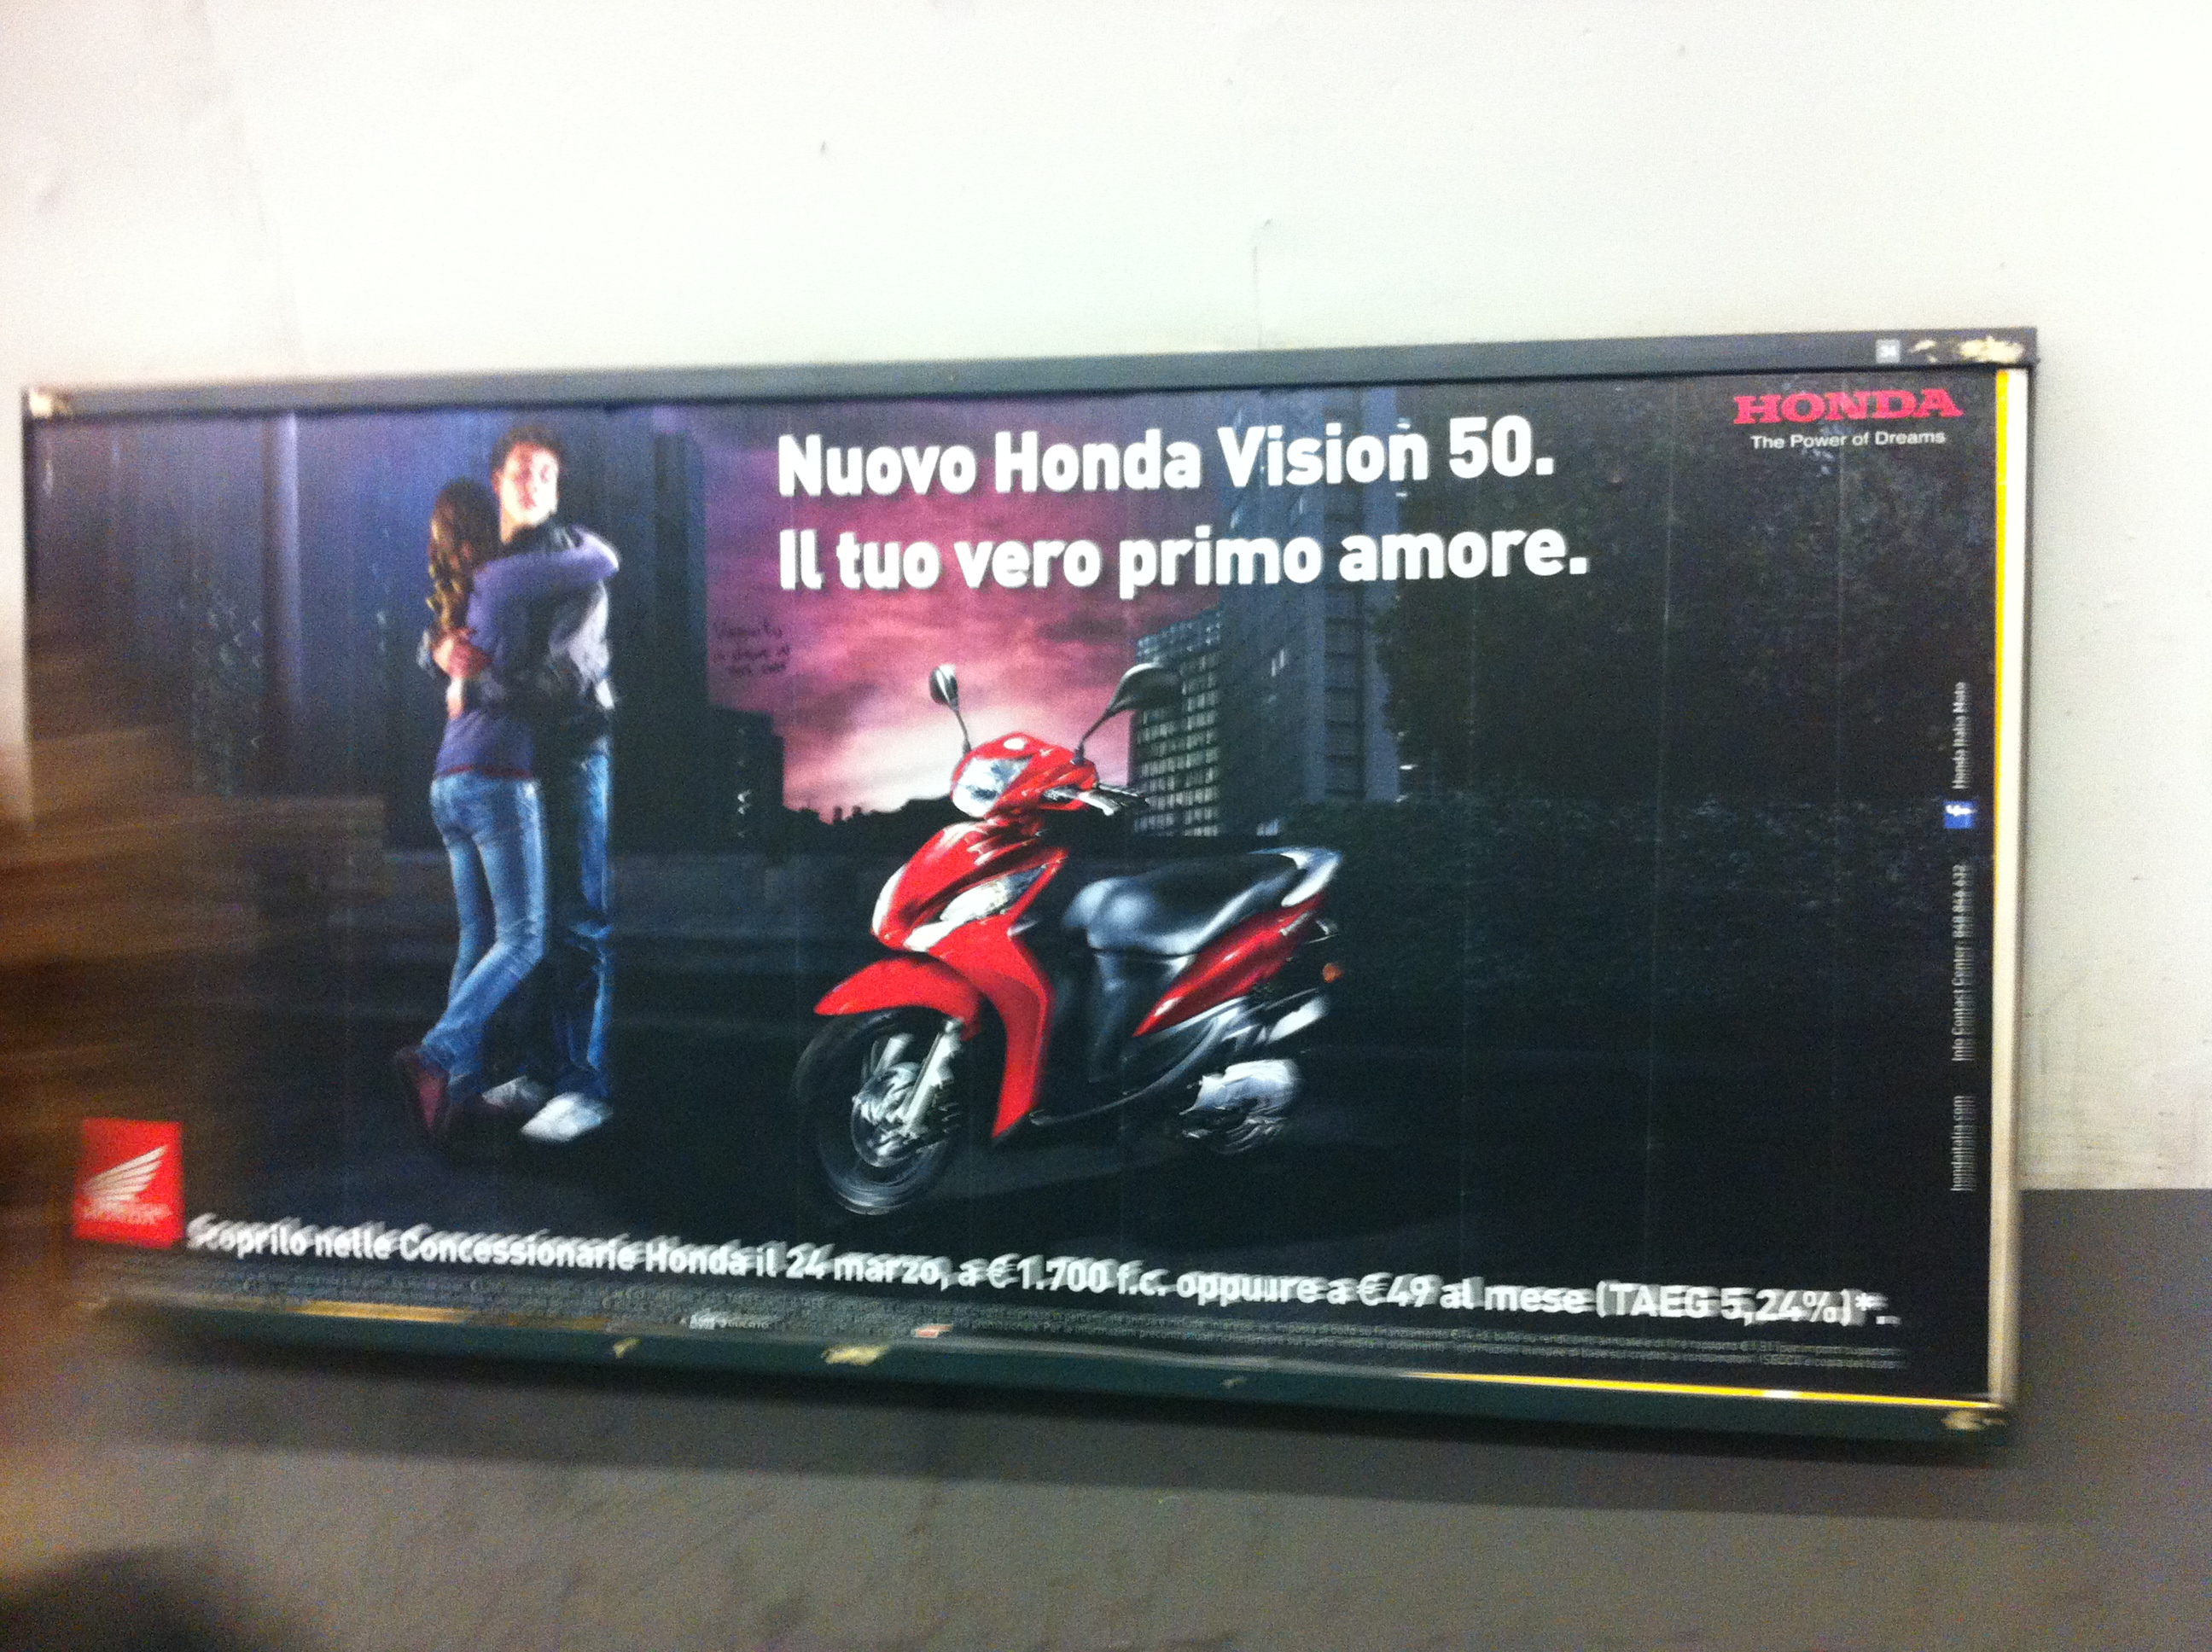 Honda advertising agency in the u.s #3